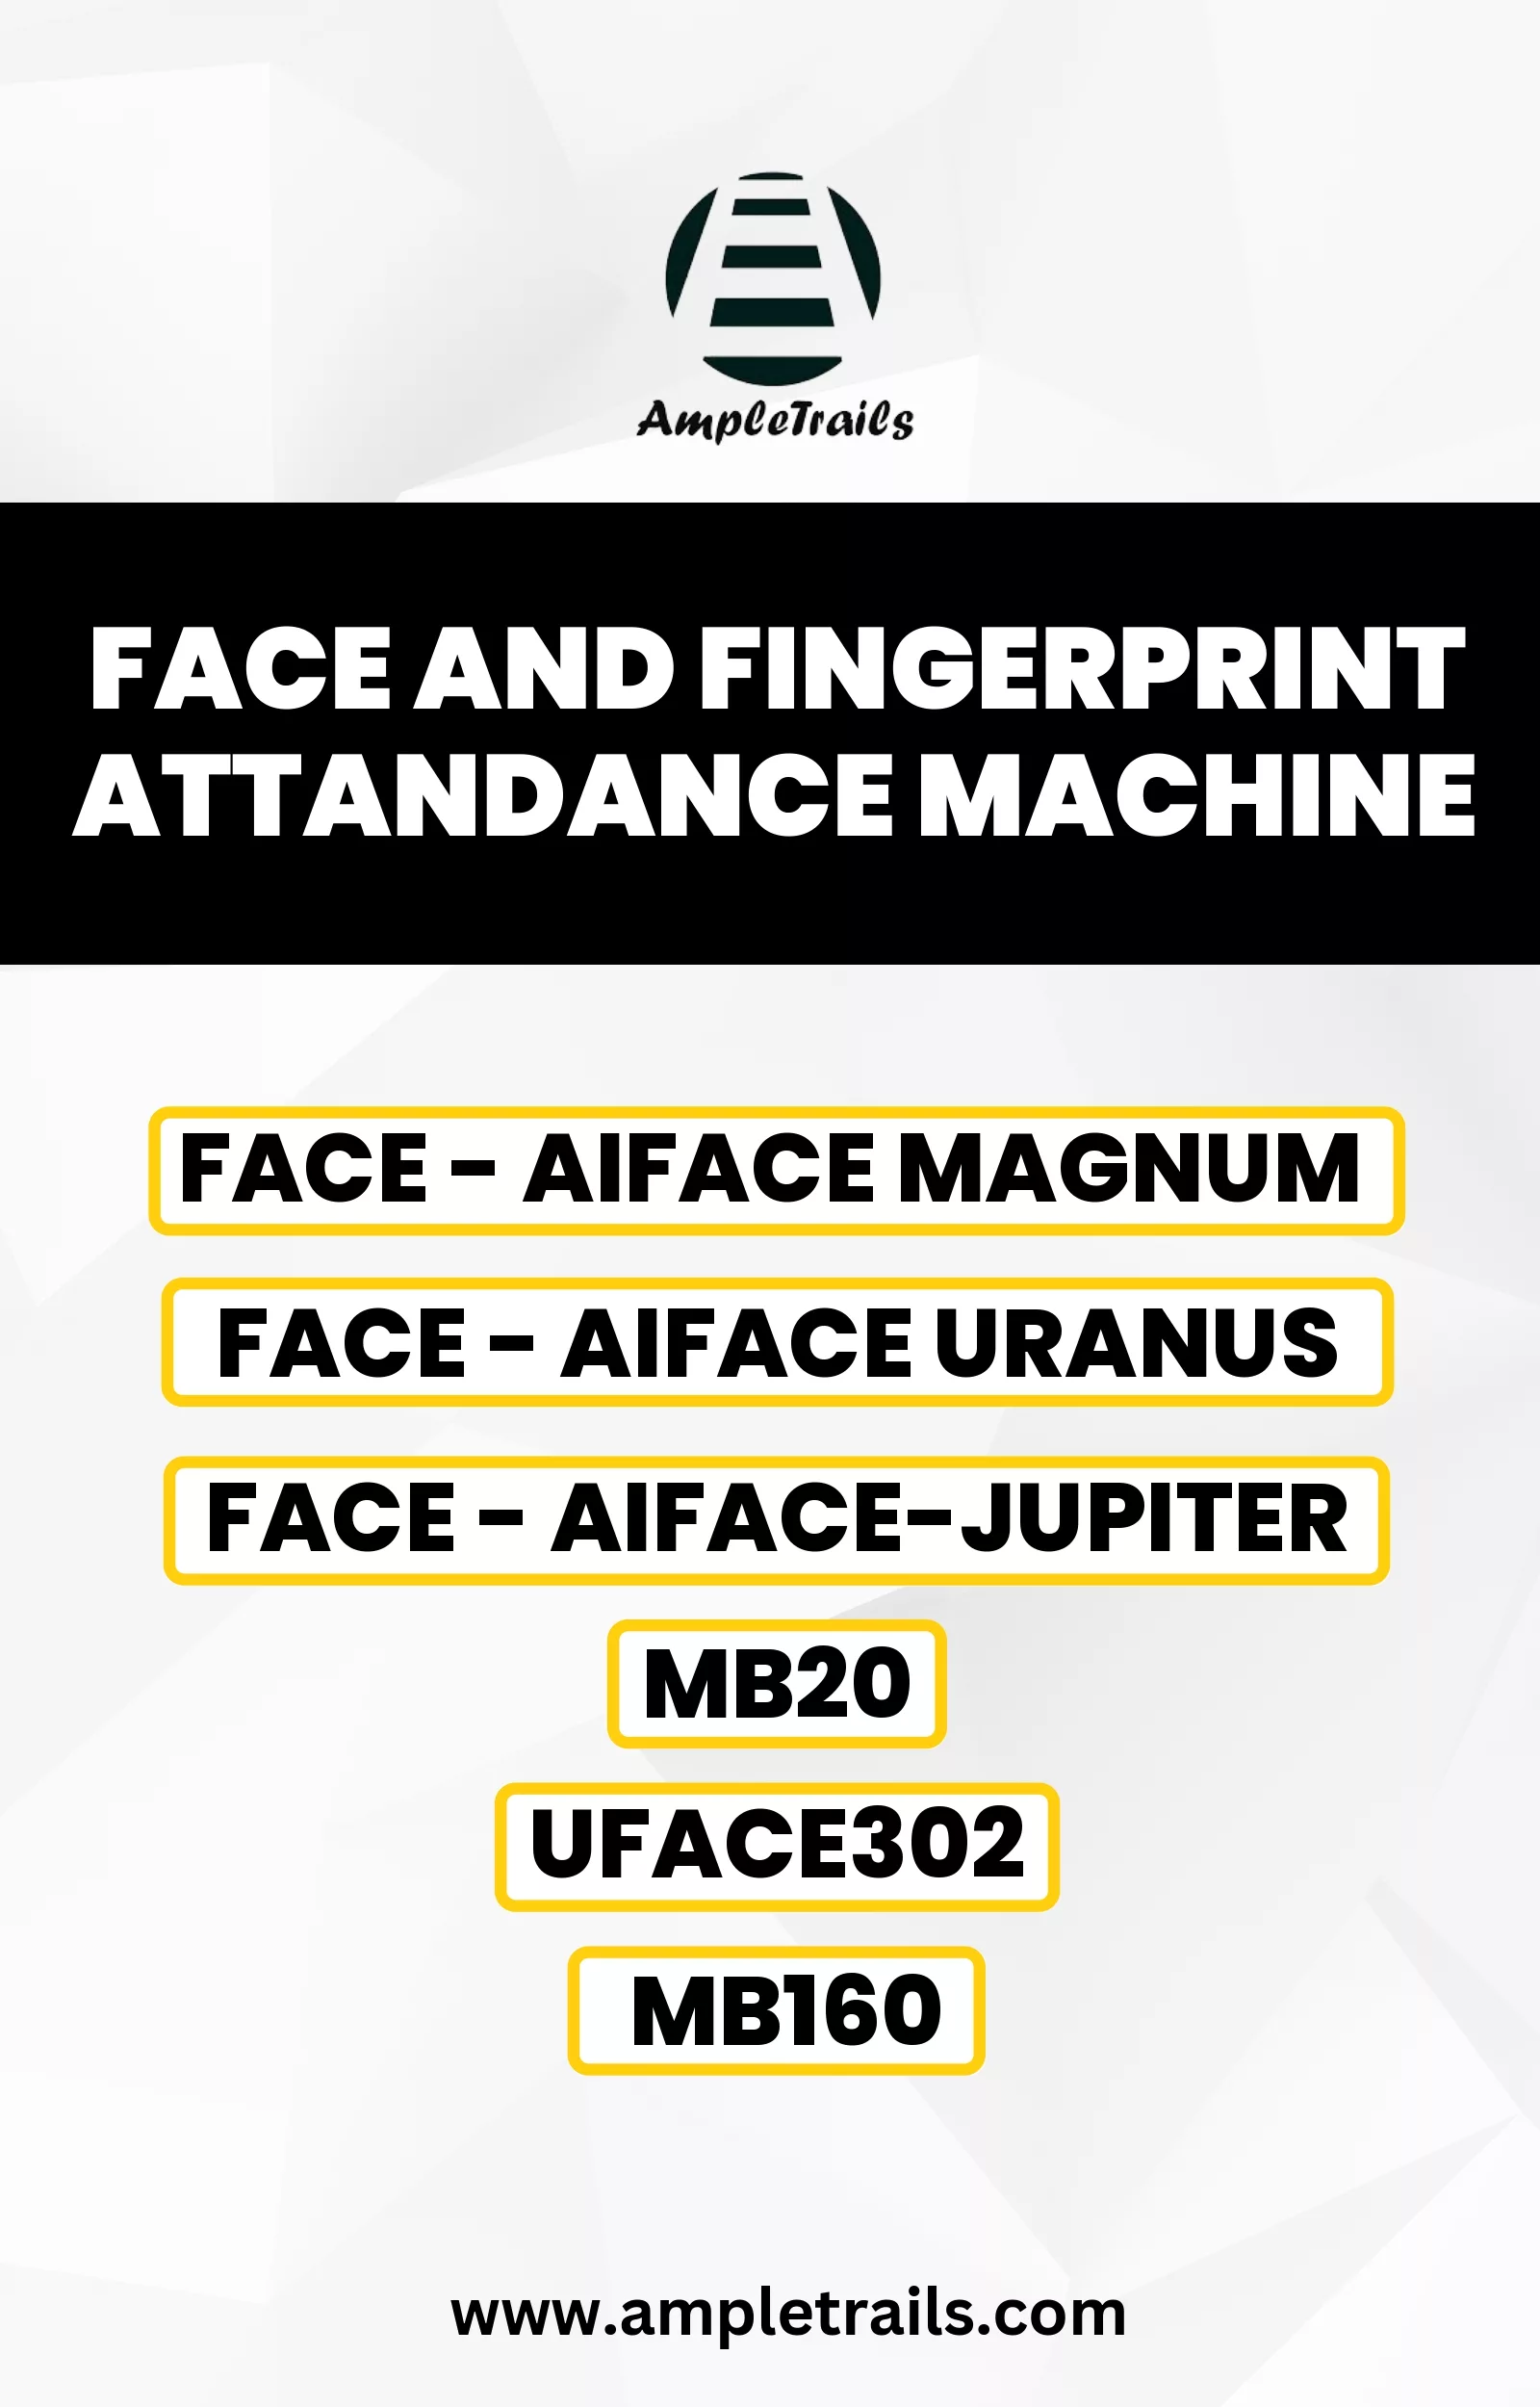 Biometric Face Attendance Machine